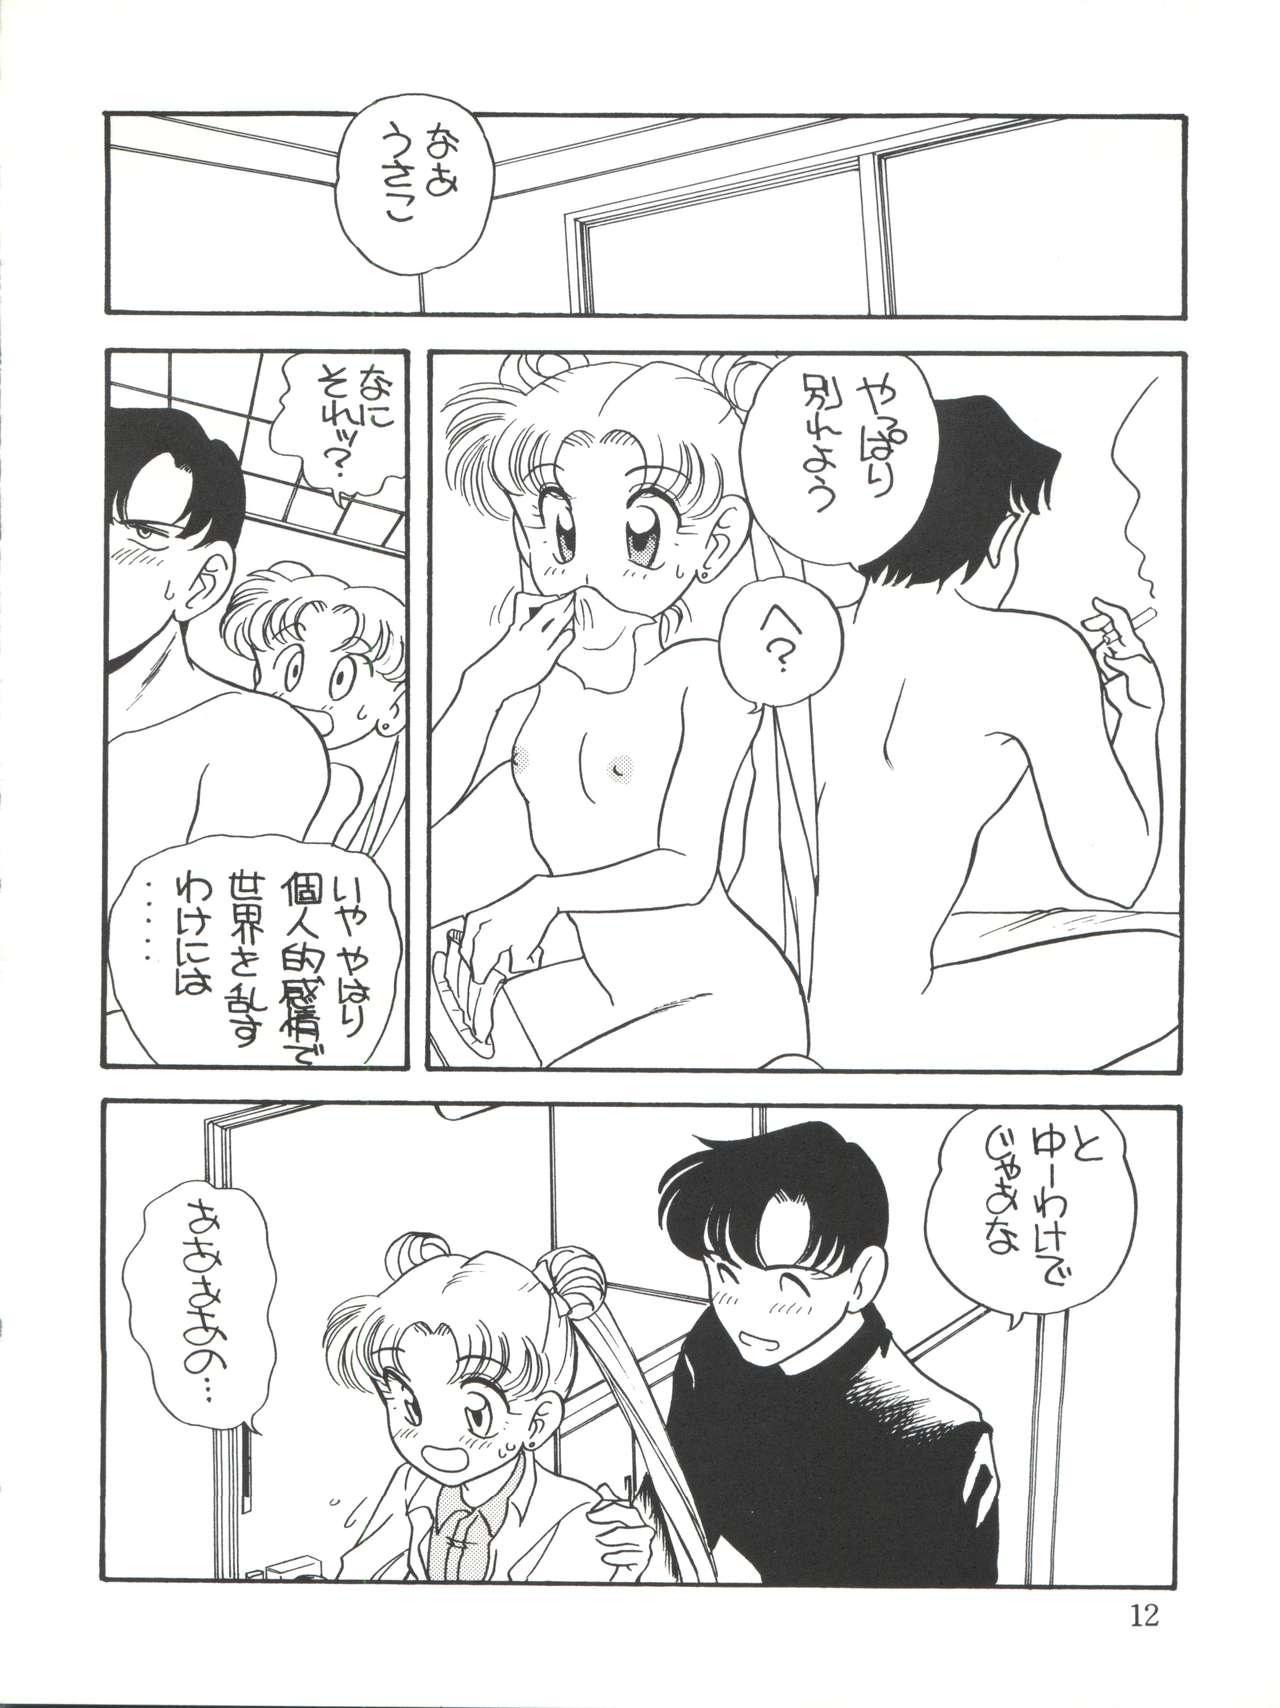 Internal Elfin 9 - Sailor moon Love - Page 12